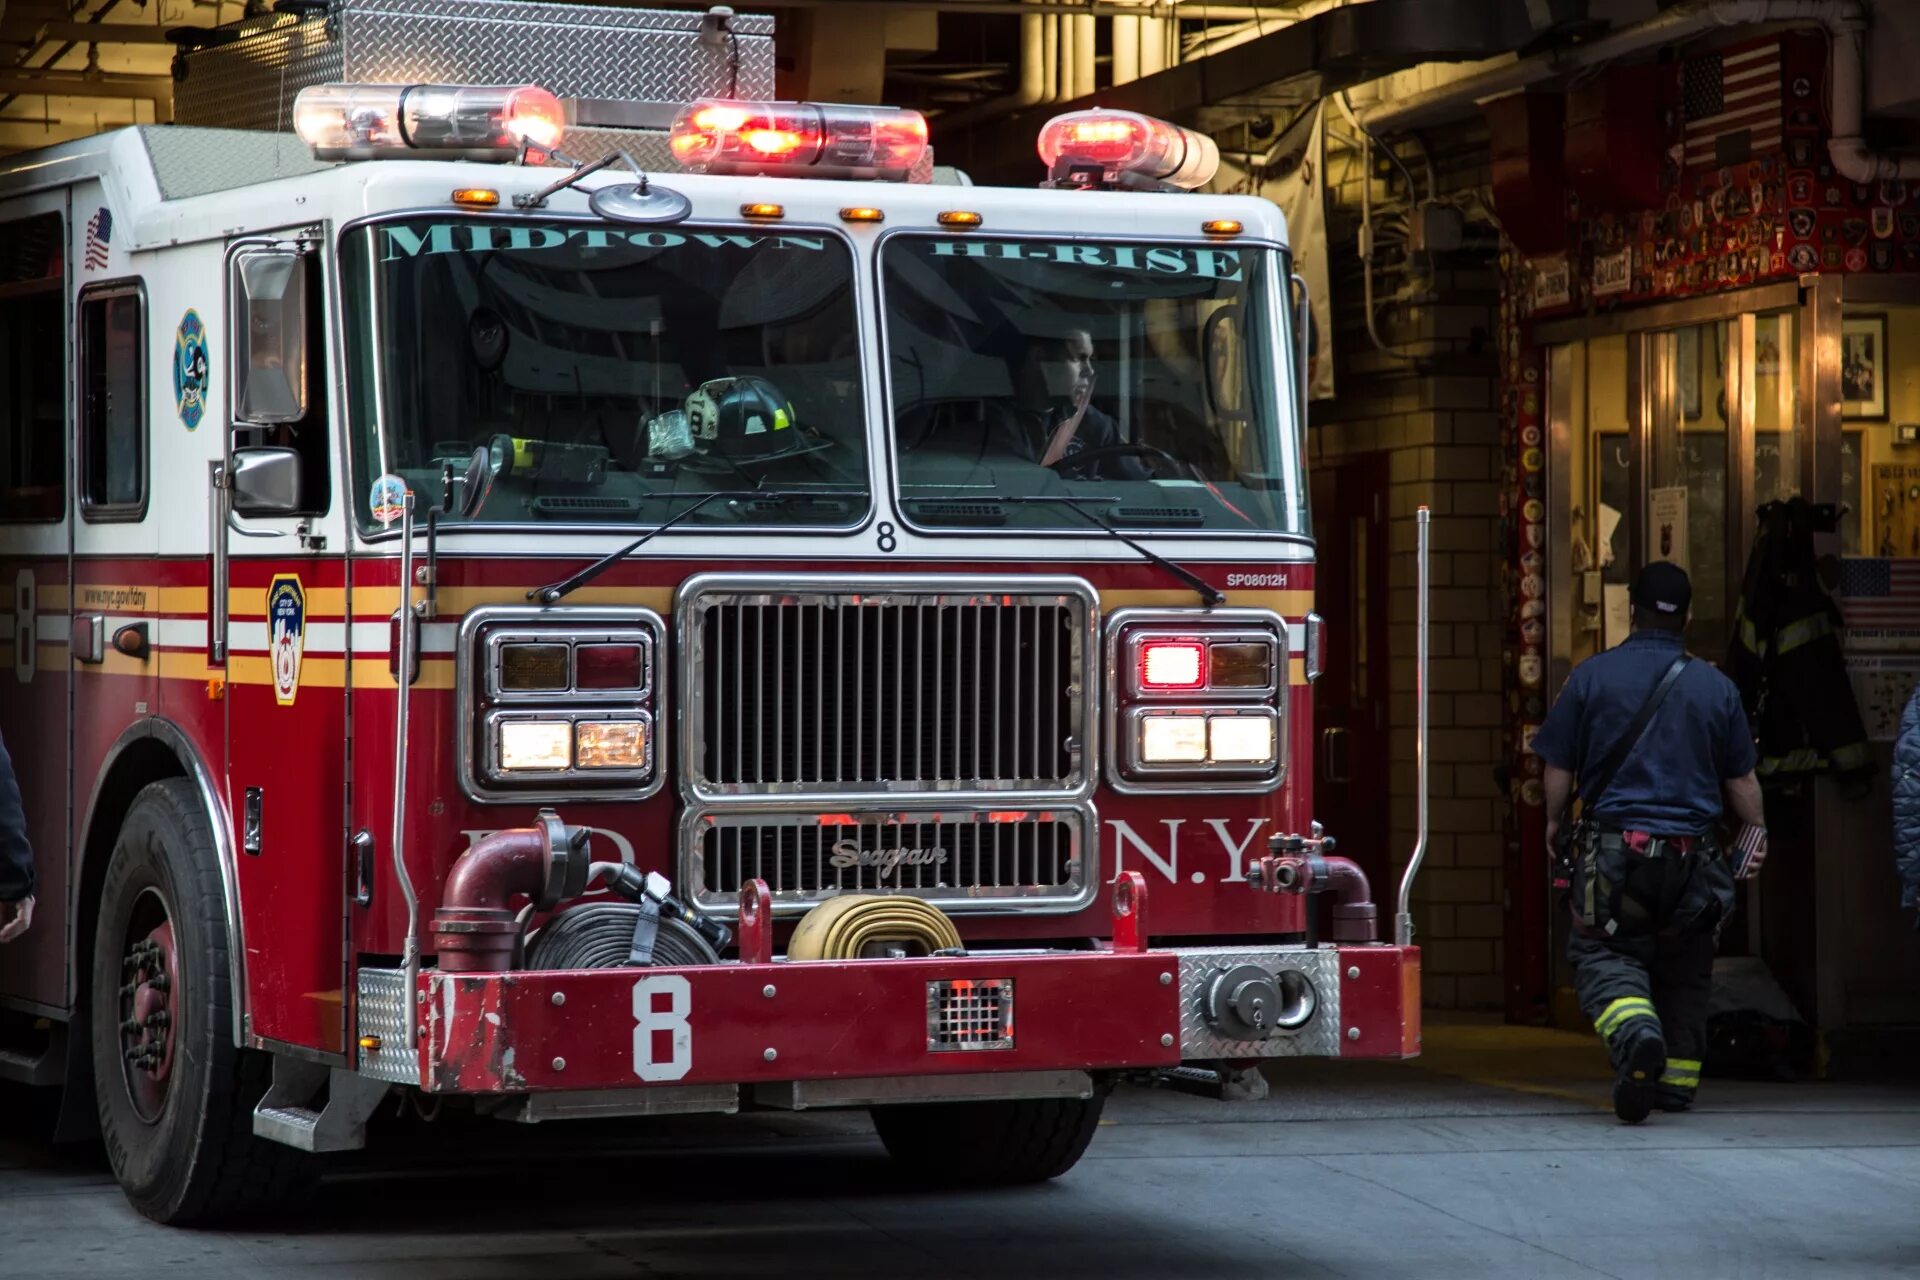 Машина "Fire Truck" пожарная, 49450. Пожарная охрана Нью Йорка. Пожарная машина FDNY. FDNY США. Пожарный грузовик